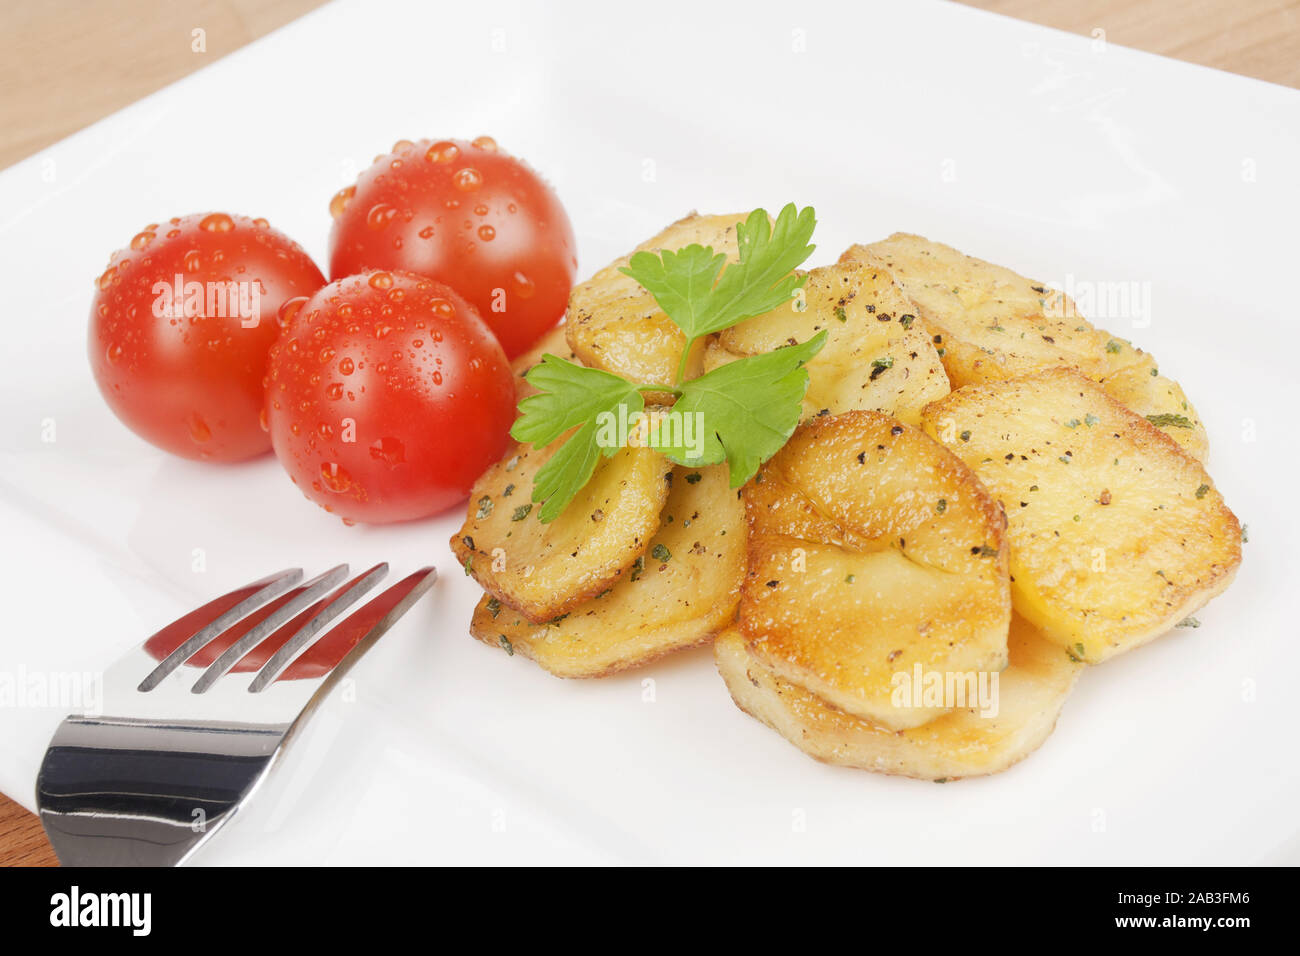 Bratkartoffeln und Tomaten auf einem Teller |Fried potatoes and tomatoes on a plate| Stock Photo